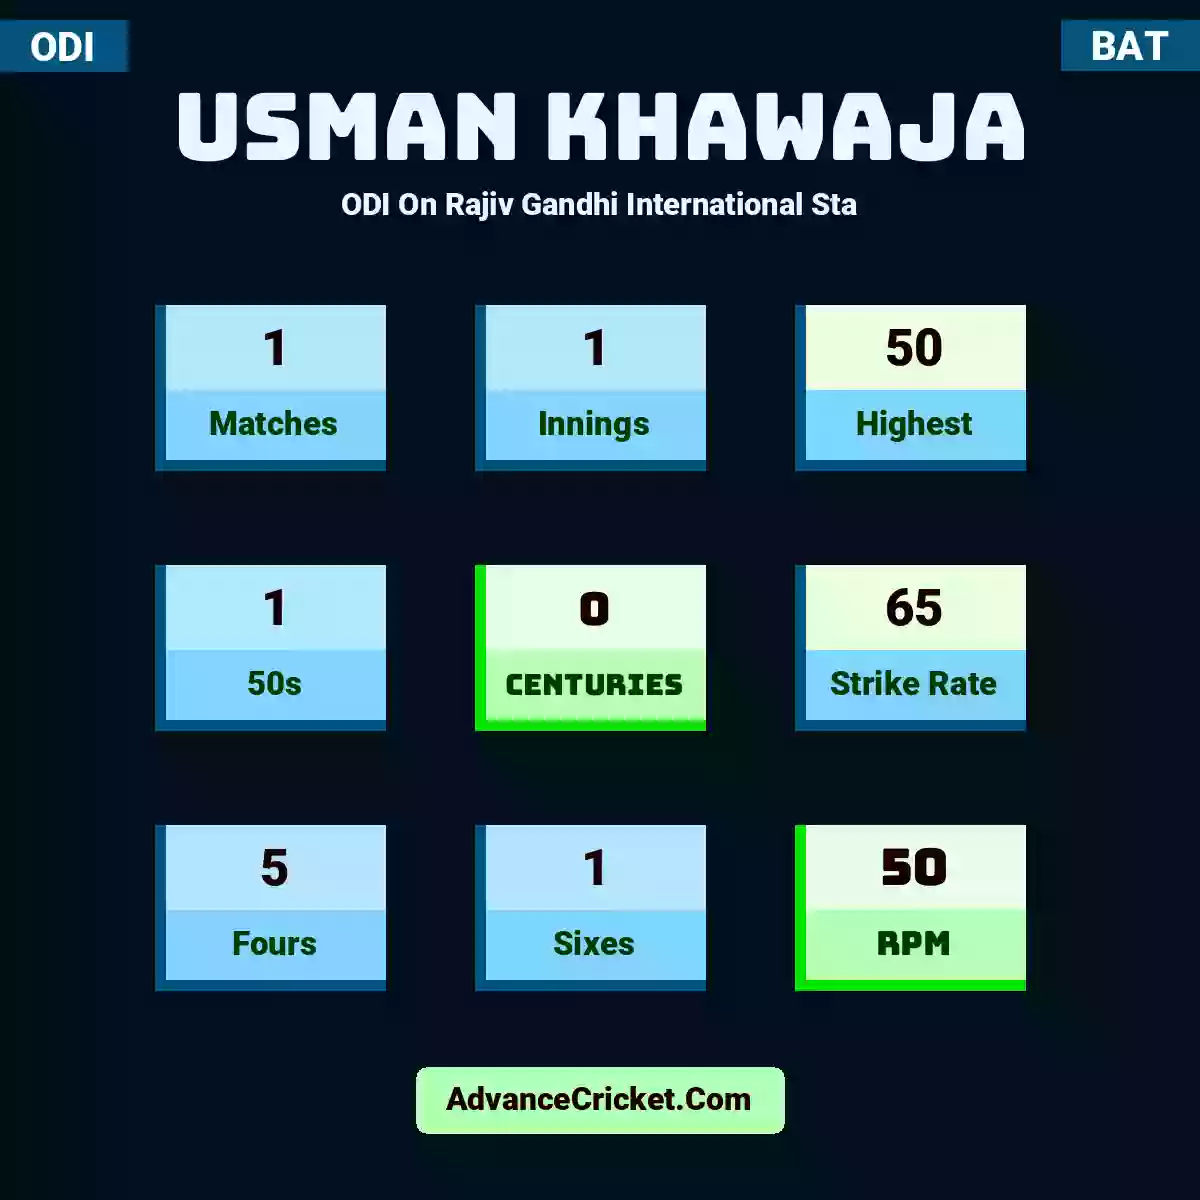 Usman Khawaja ODI  On Rajiv Gandhi International Sta, Usman Khawaja played 1 matches, scored 50 runs as highest, 1 half-centuries, and 0 centuries, with a strike rate of 65. U.Khawaja hit 5 fours and 1 sixes, with an RPM of 50.